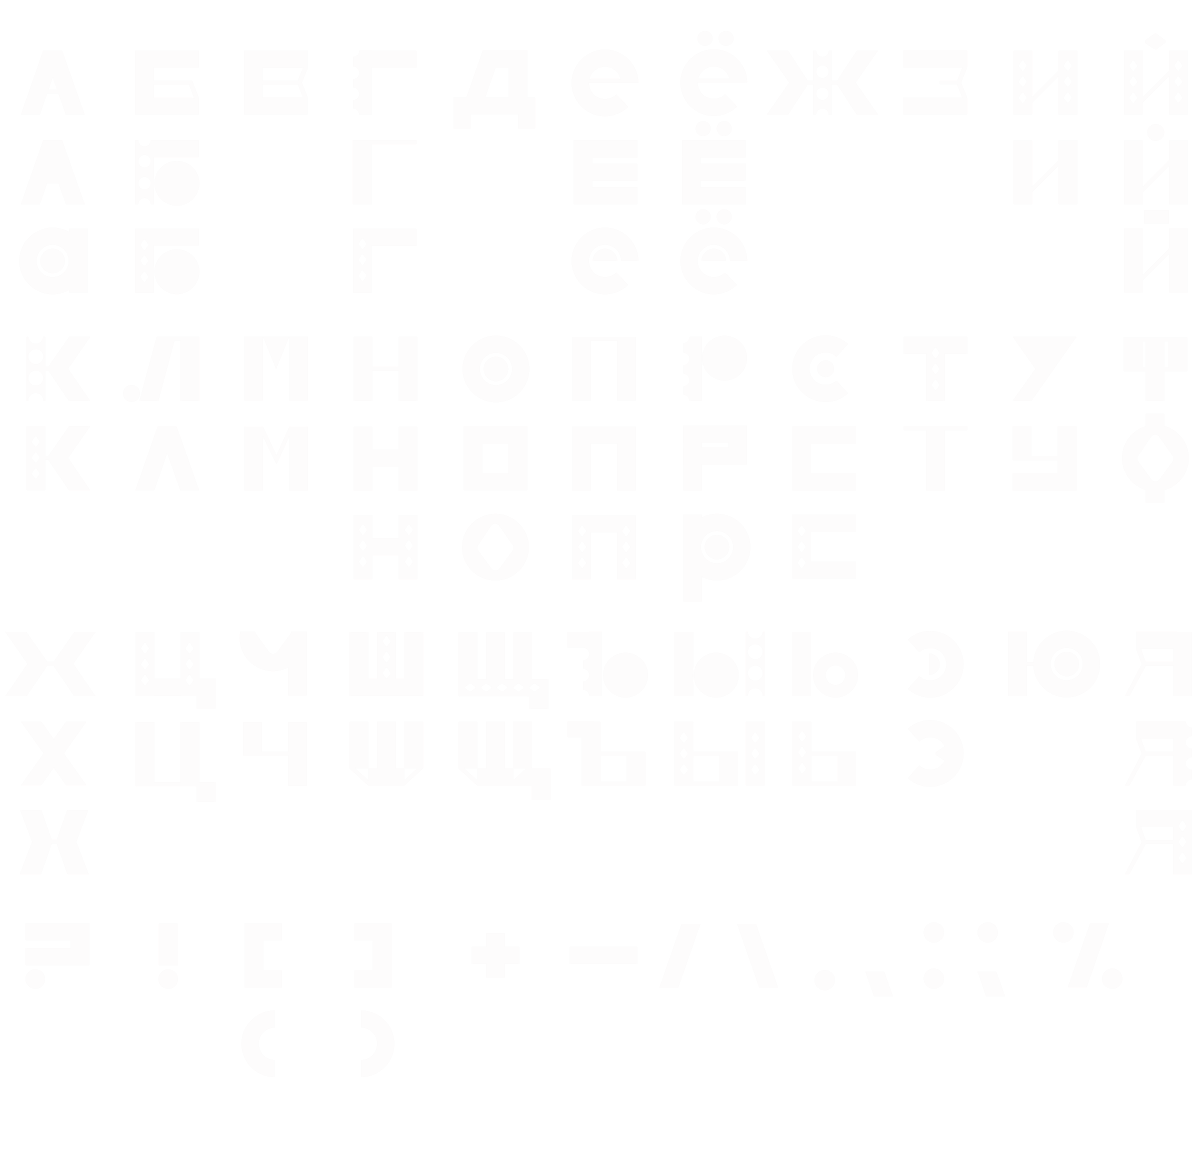 dziga vertov book design font design animation  ILLUSTRATION  typography   russian design